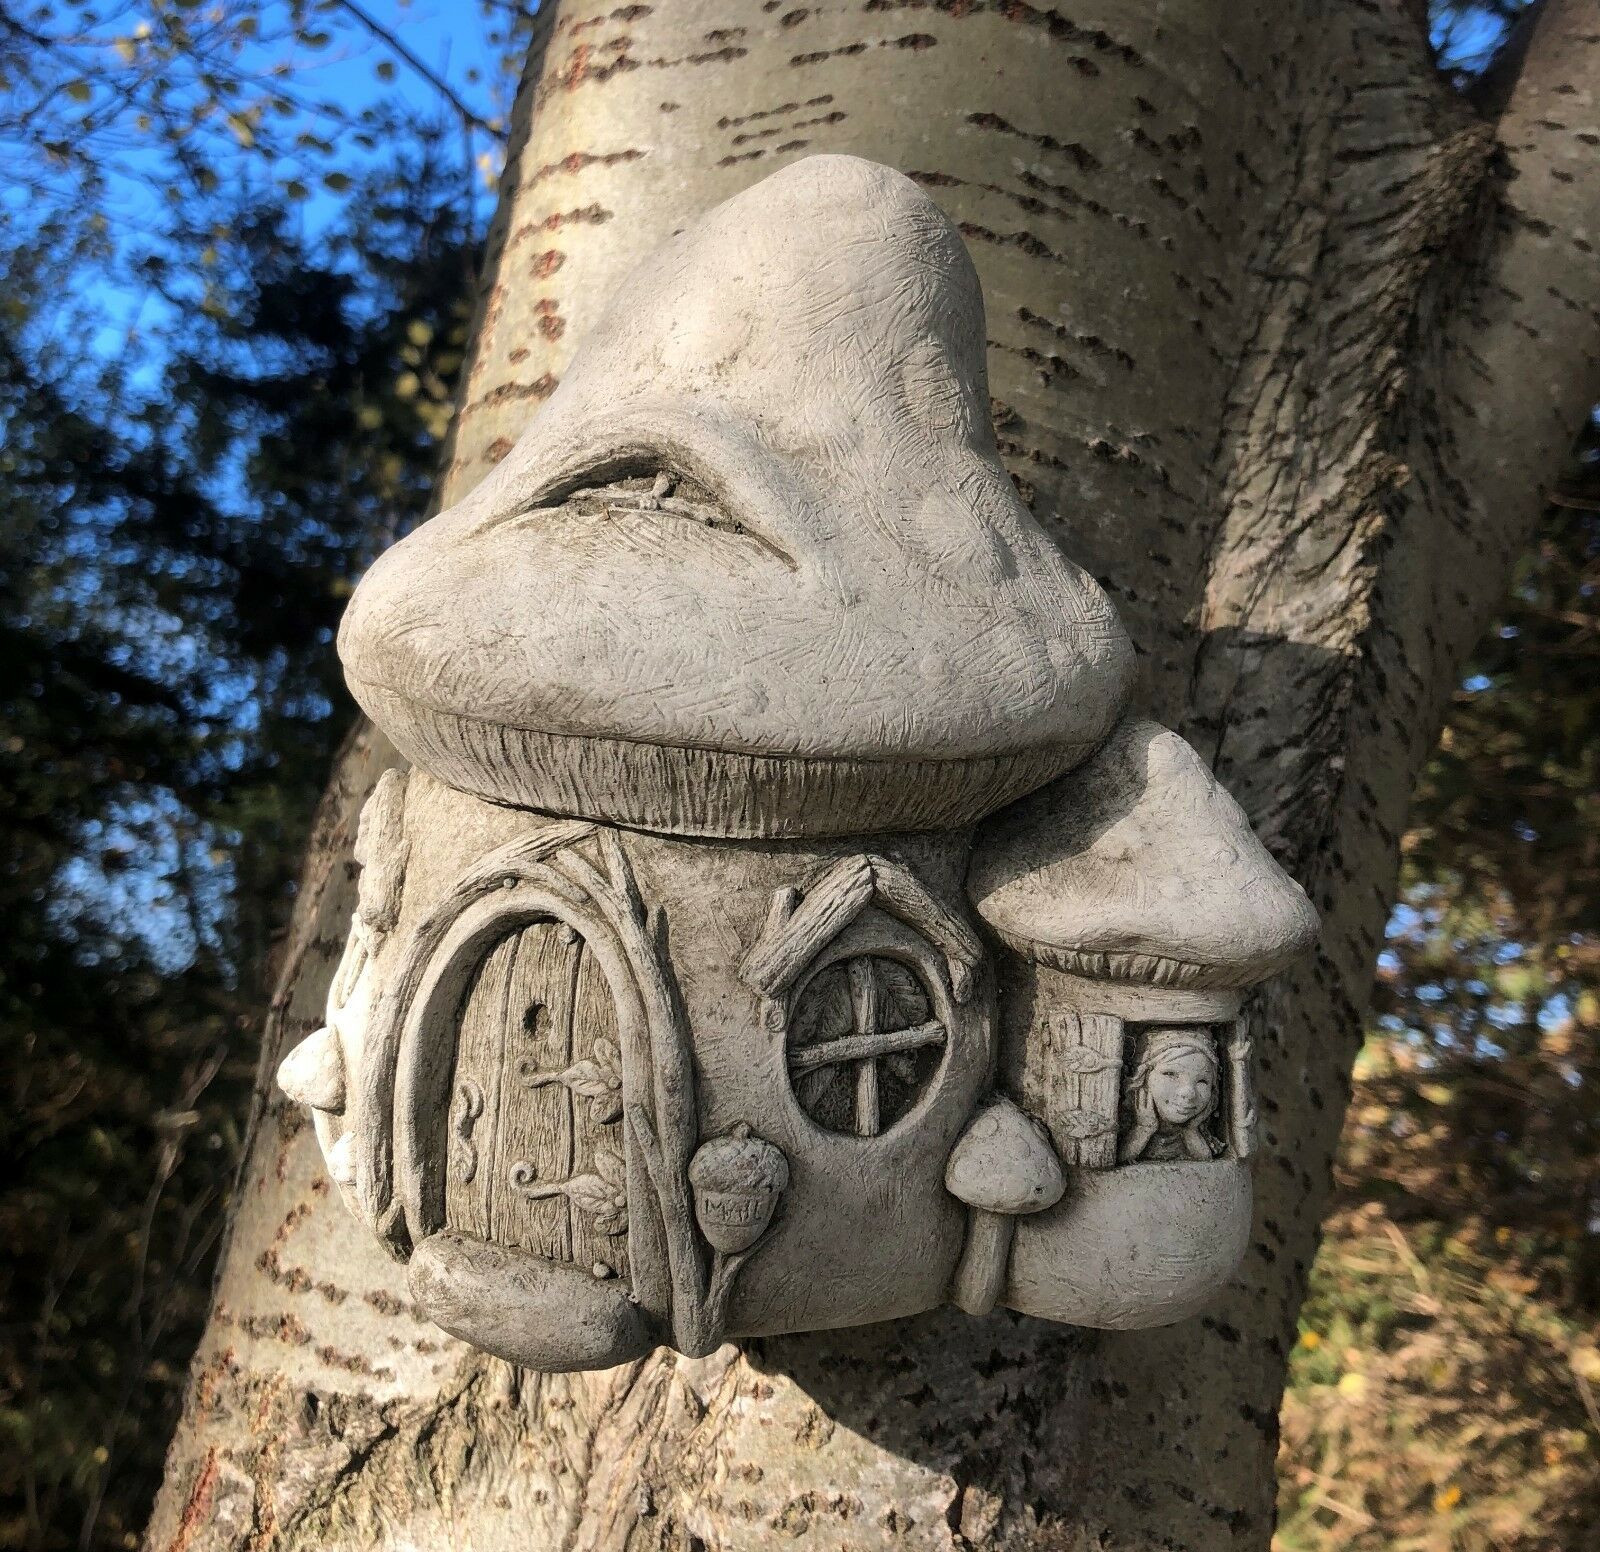 Stone Fairy House Ornament 